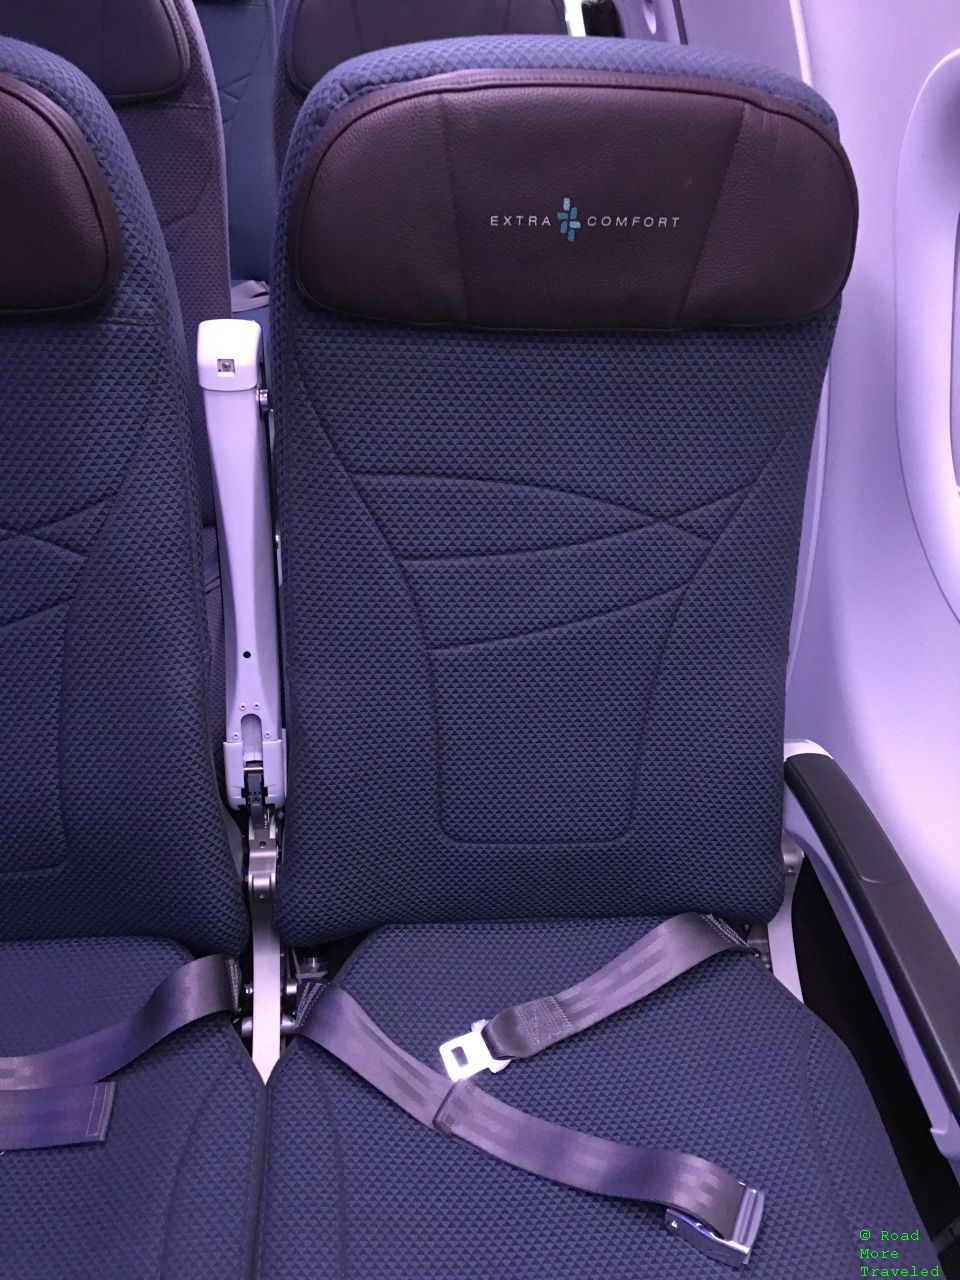 Extra Comfort Seats